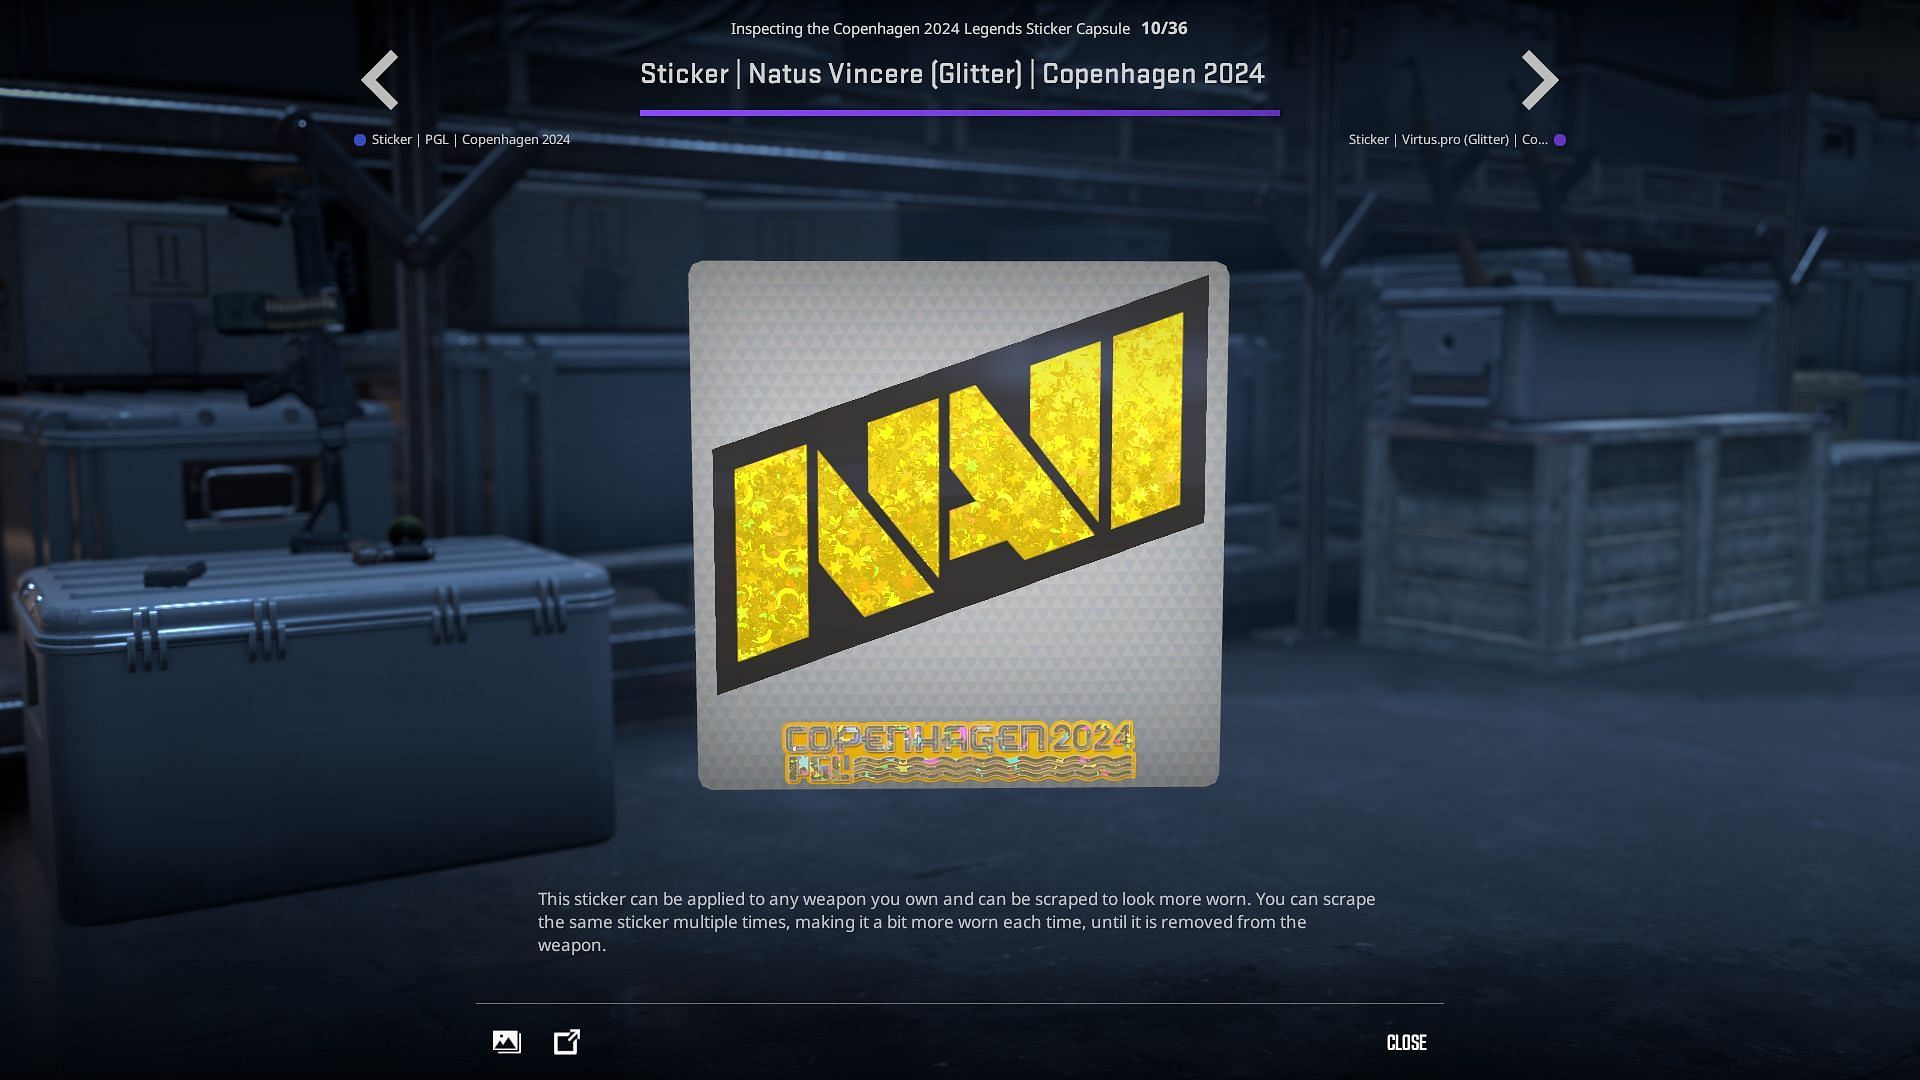 NAVI Glitter sticker (Image via Valve)